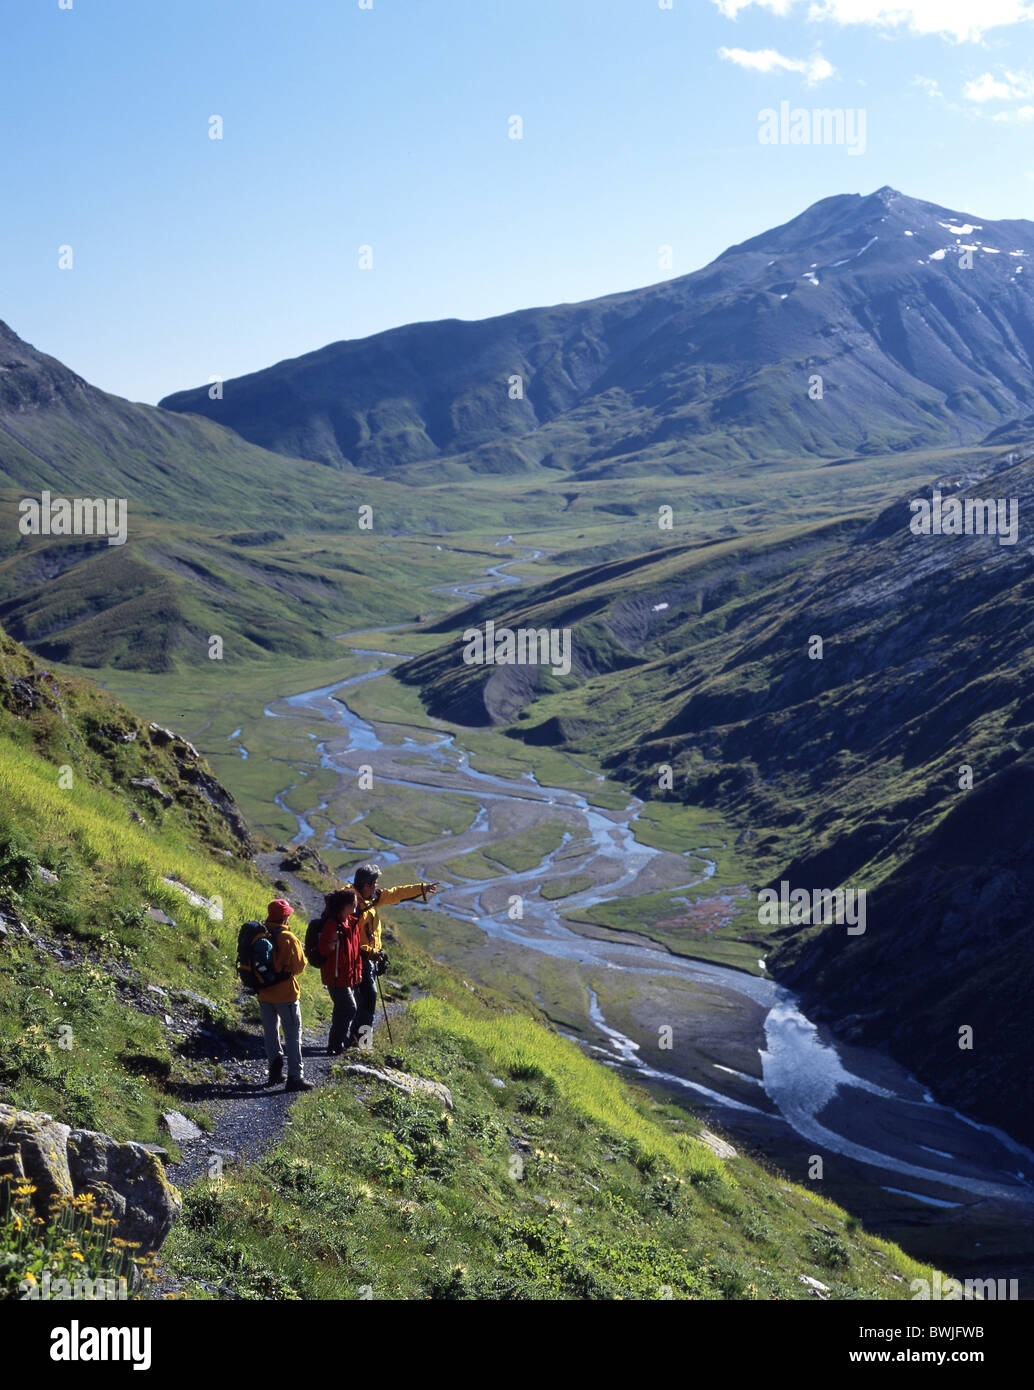 Greina level plain group traveller walking hiking mountain walking scenery landscape mountains Alps Grisons Stock Photo